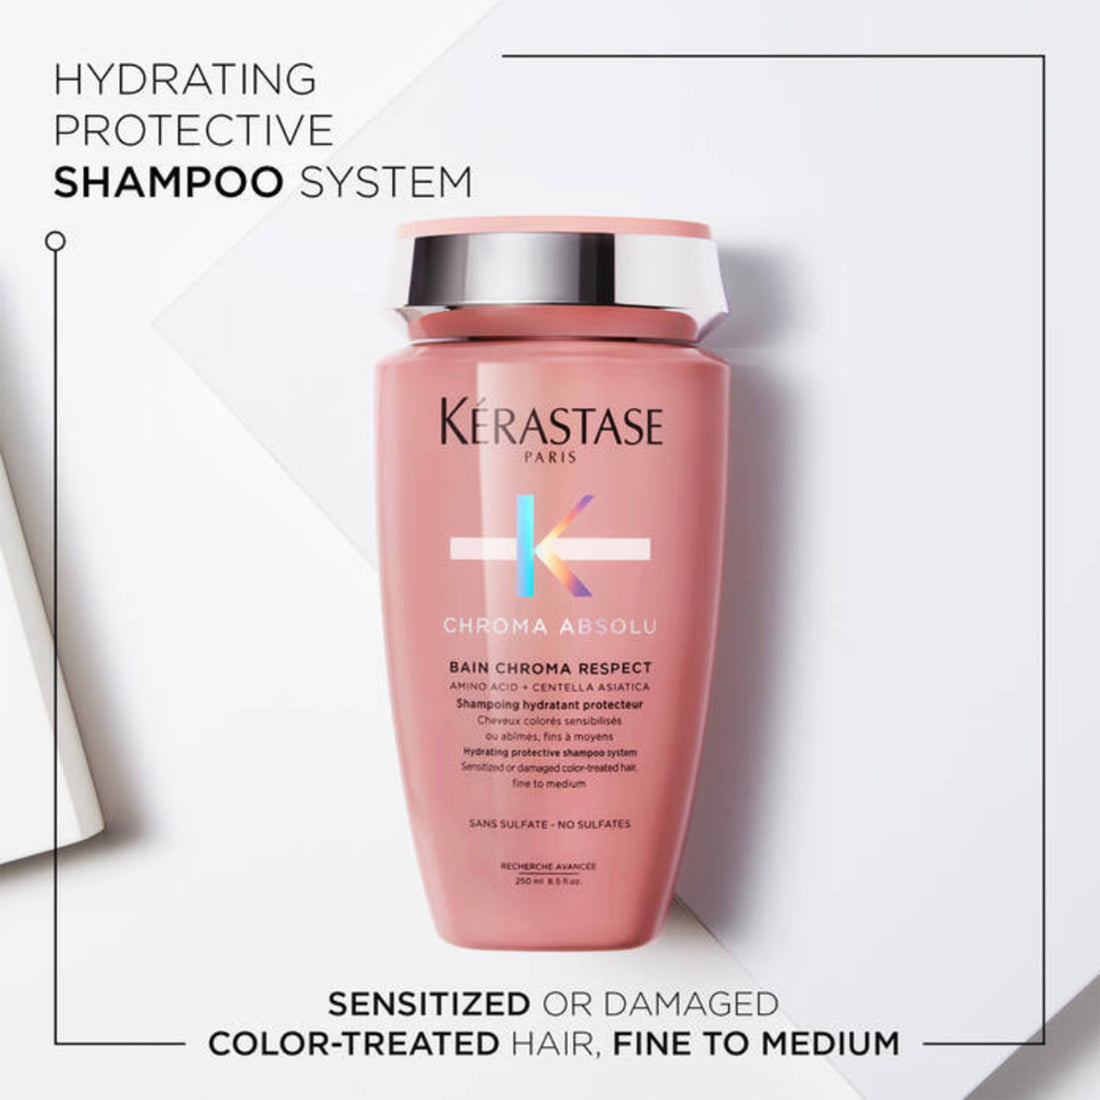 Chroma Absolu Bain Chroma Respect Hydrating Protective Shampoo System